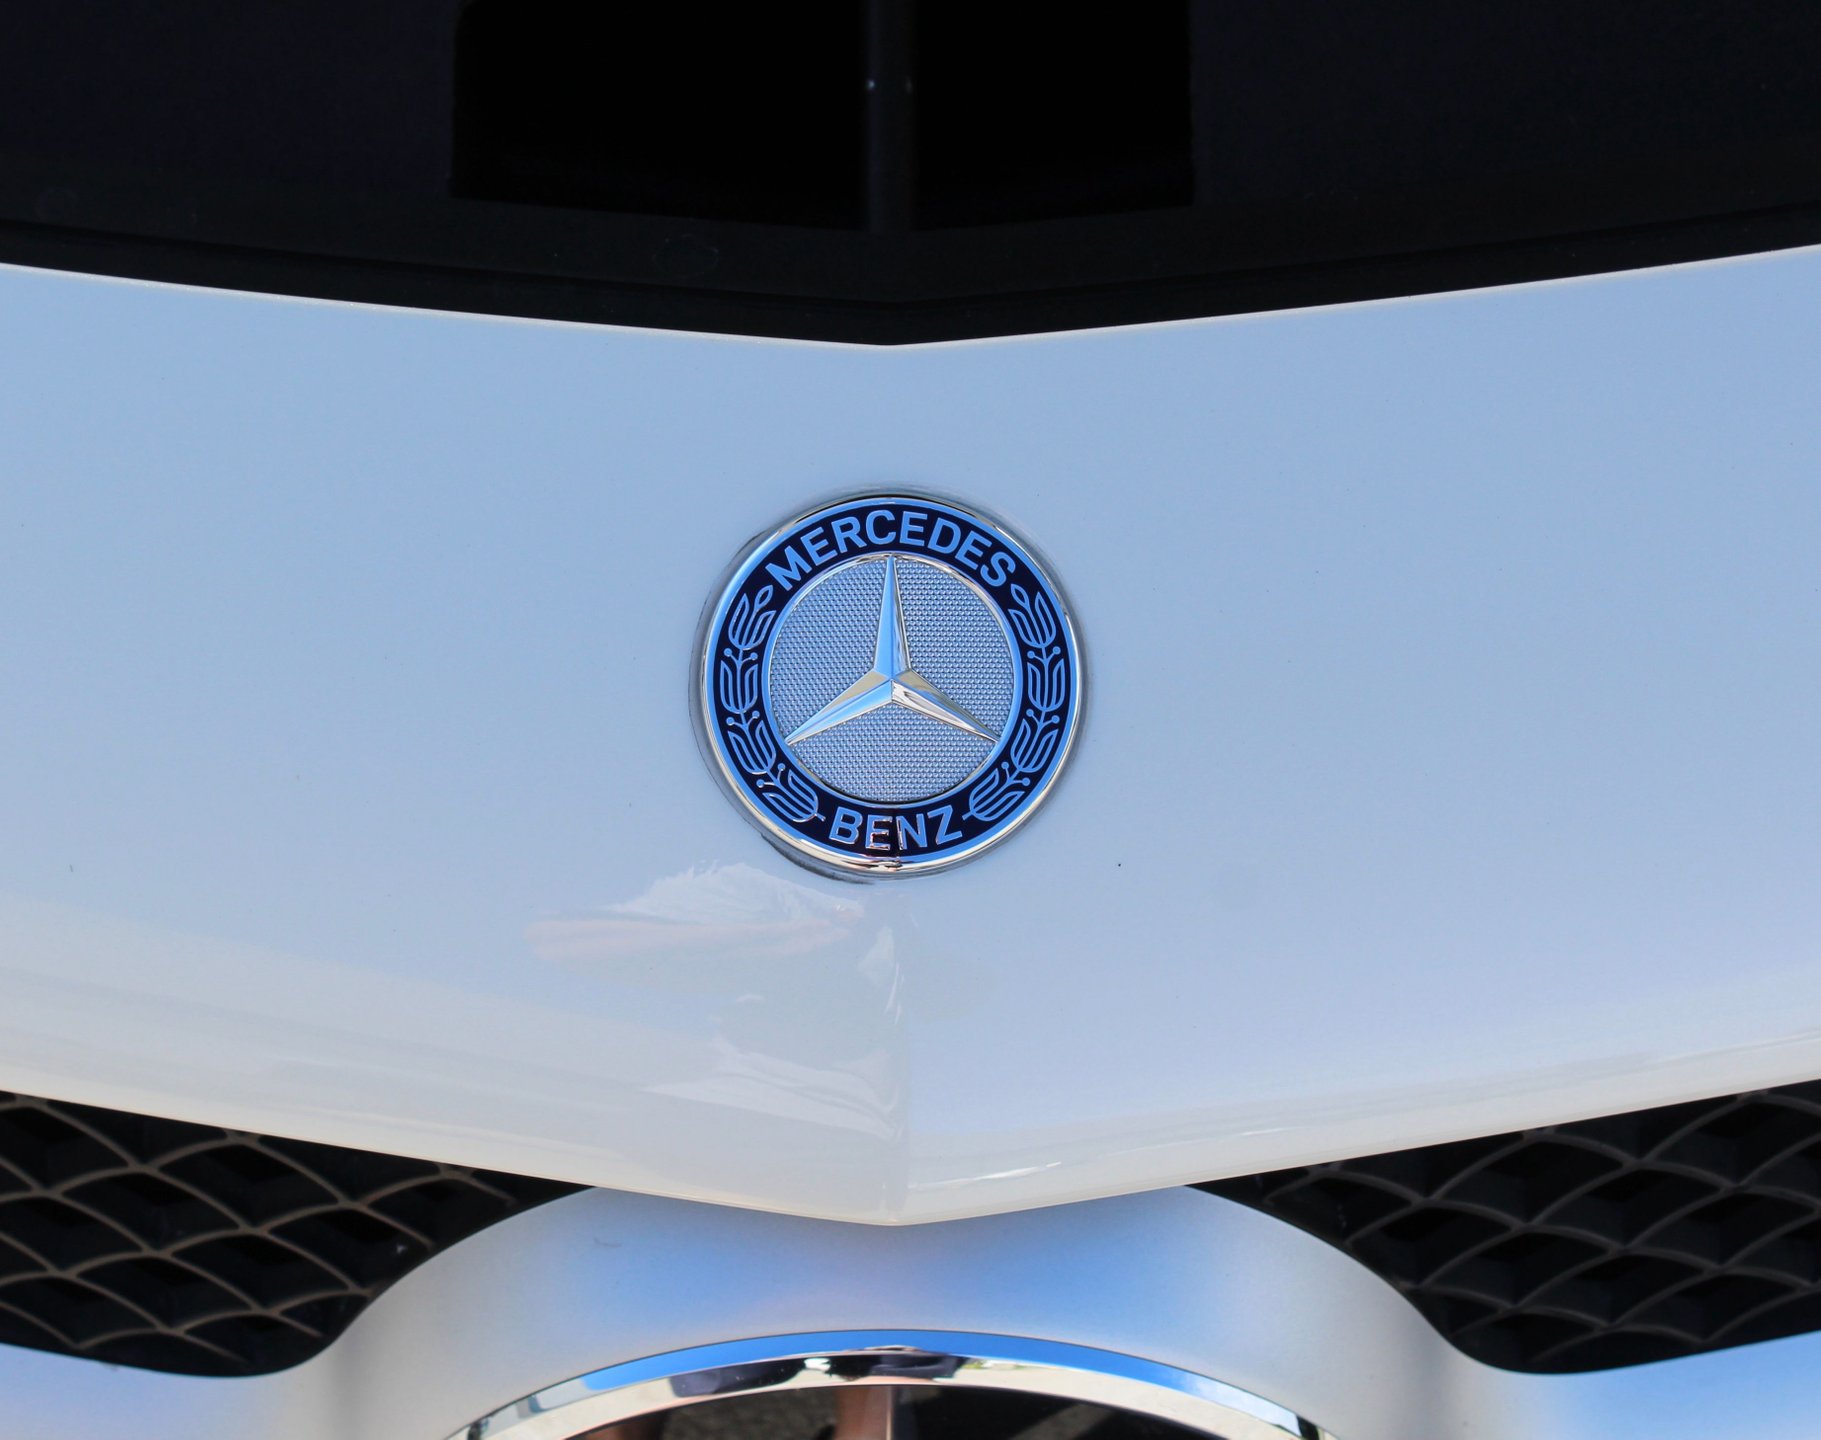 For Sale 2015 Mercedes SL 550 White Arrow